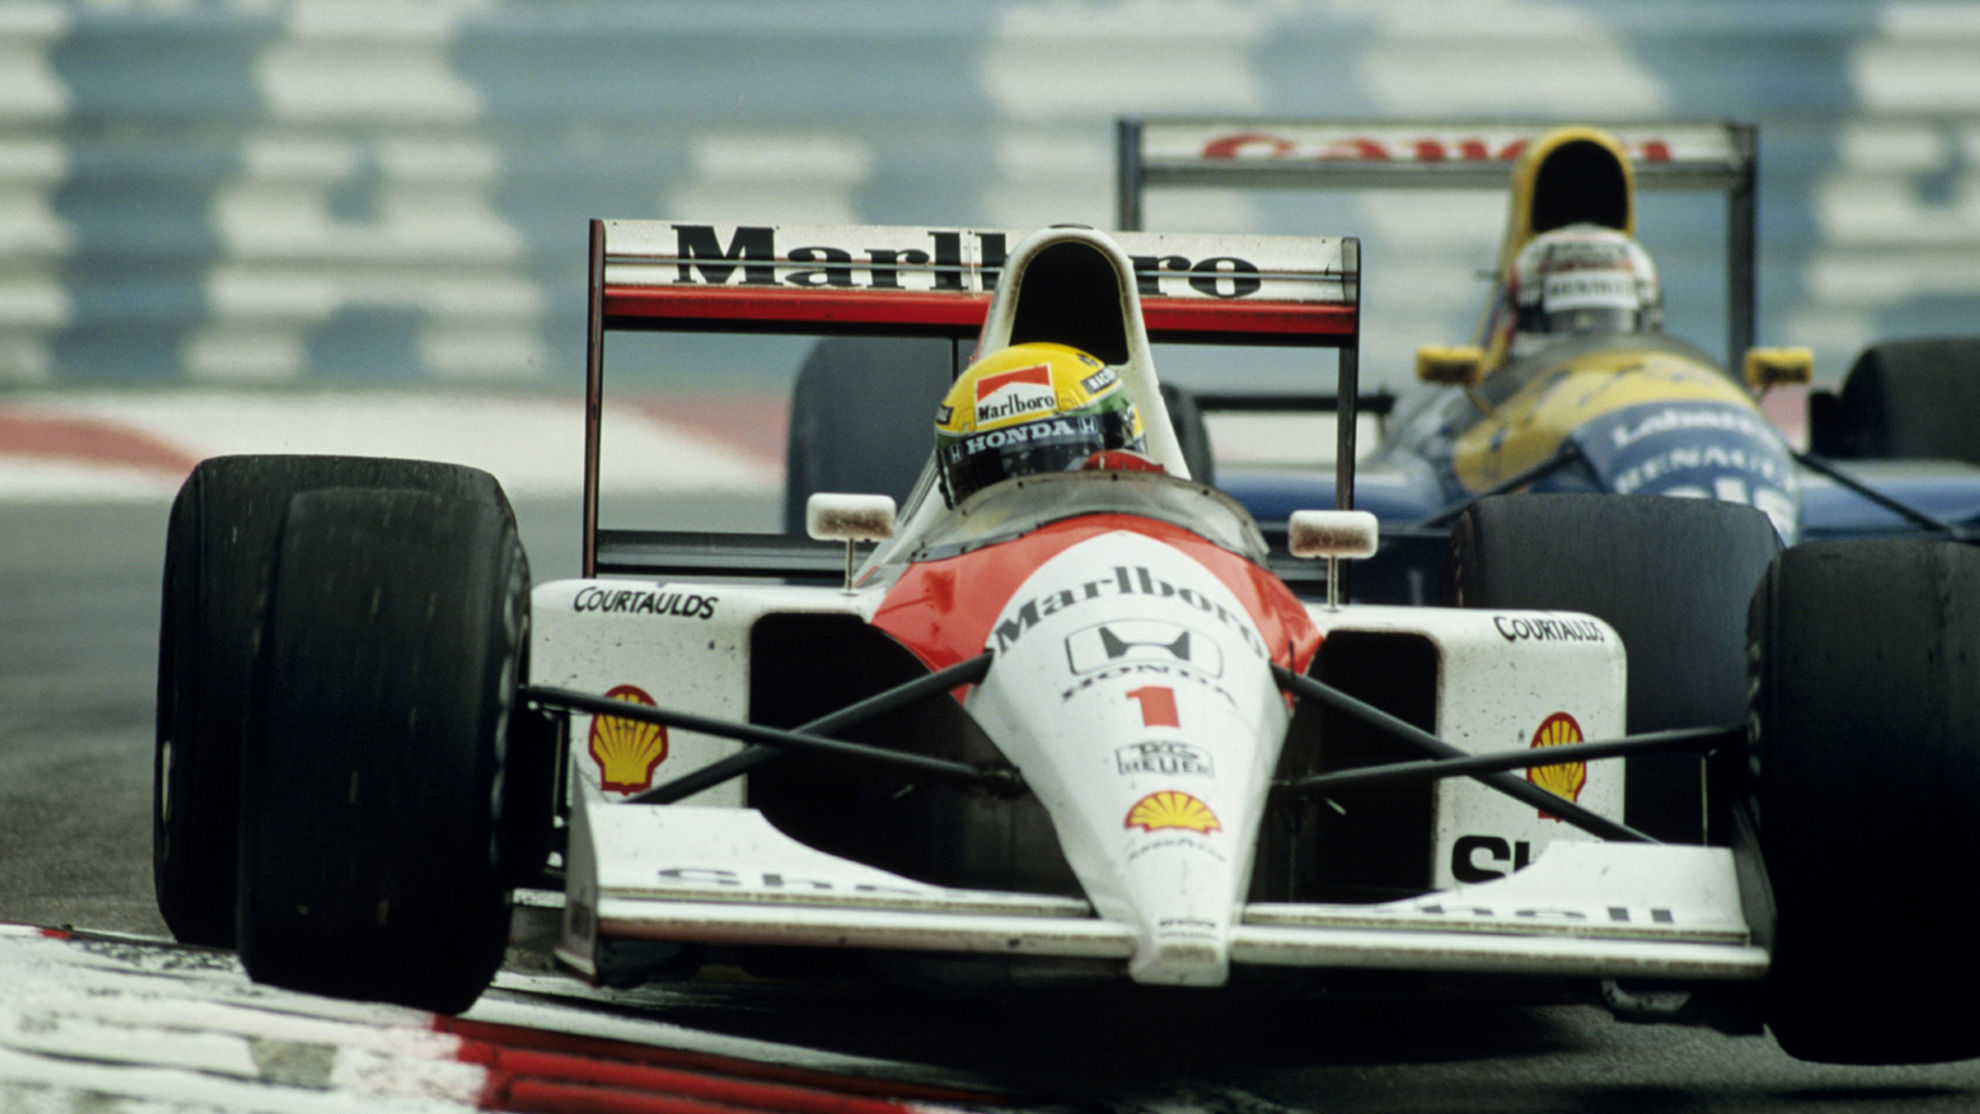 McLaren Senna - The Ayrton Senna Institute